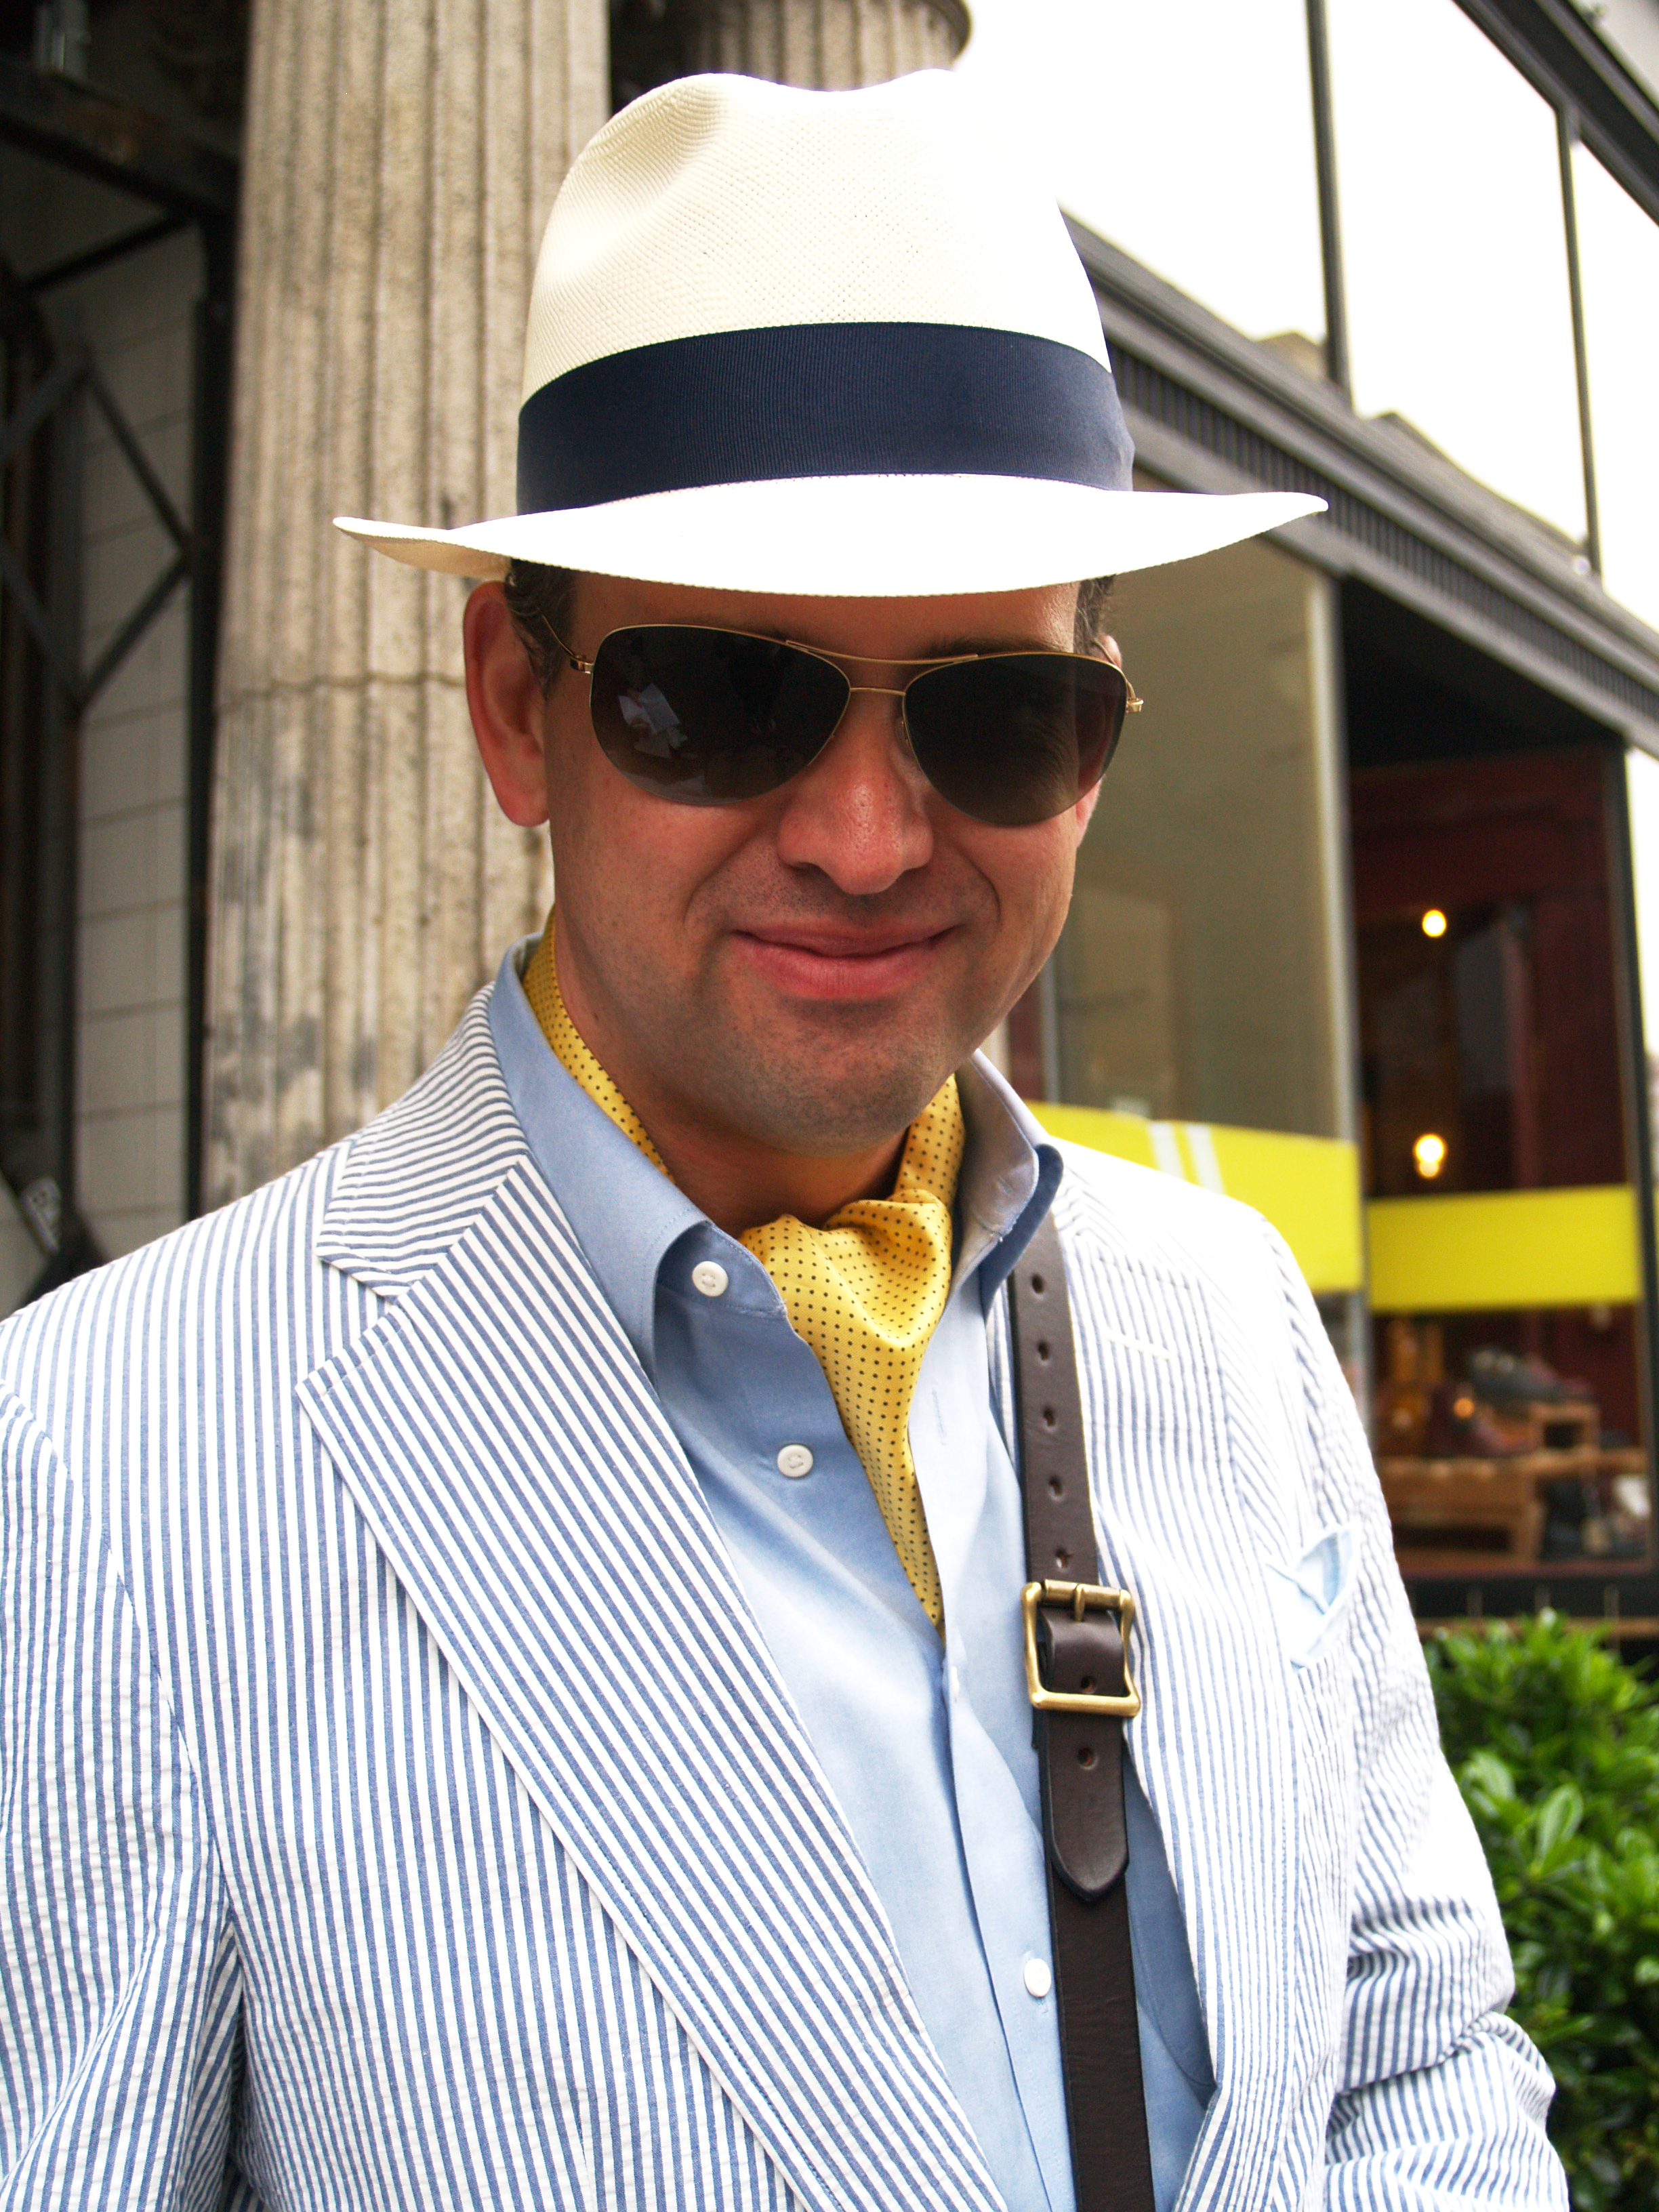 Seattle Men's Fashion: Searsucker Suit and Summer Hat